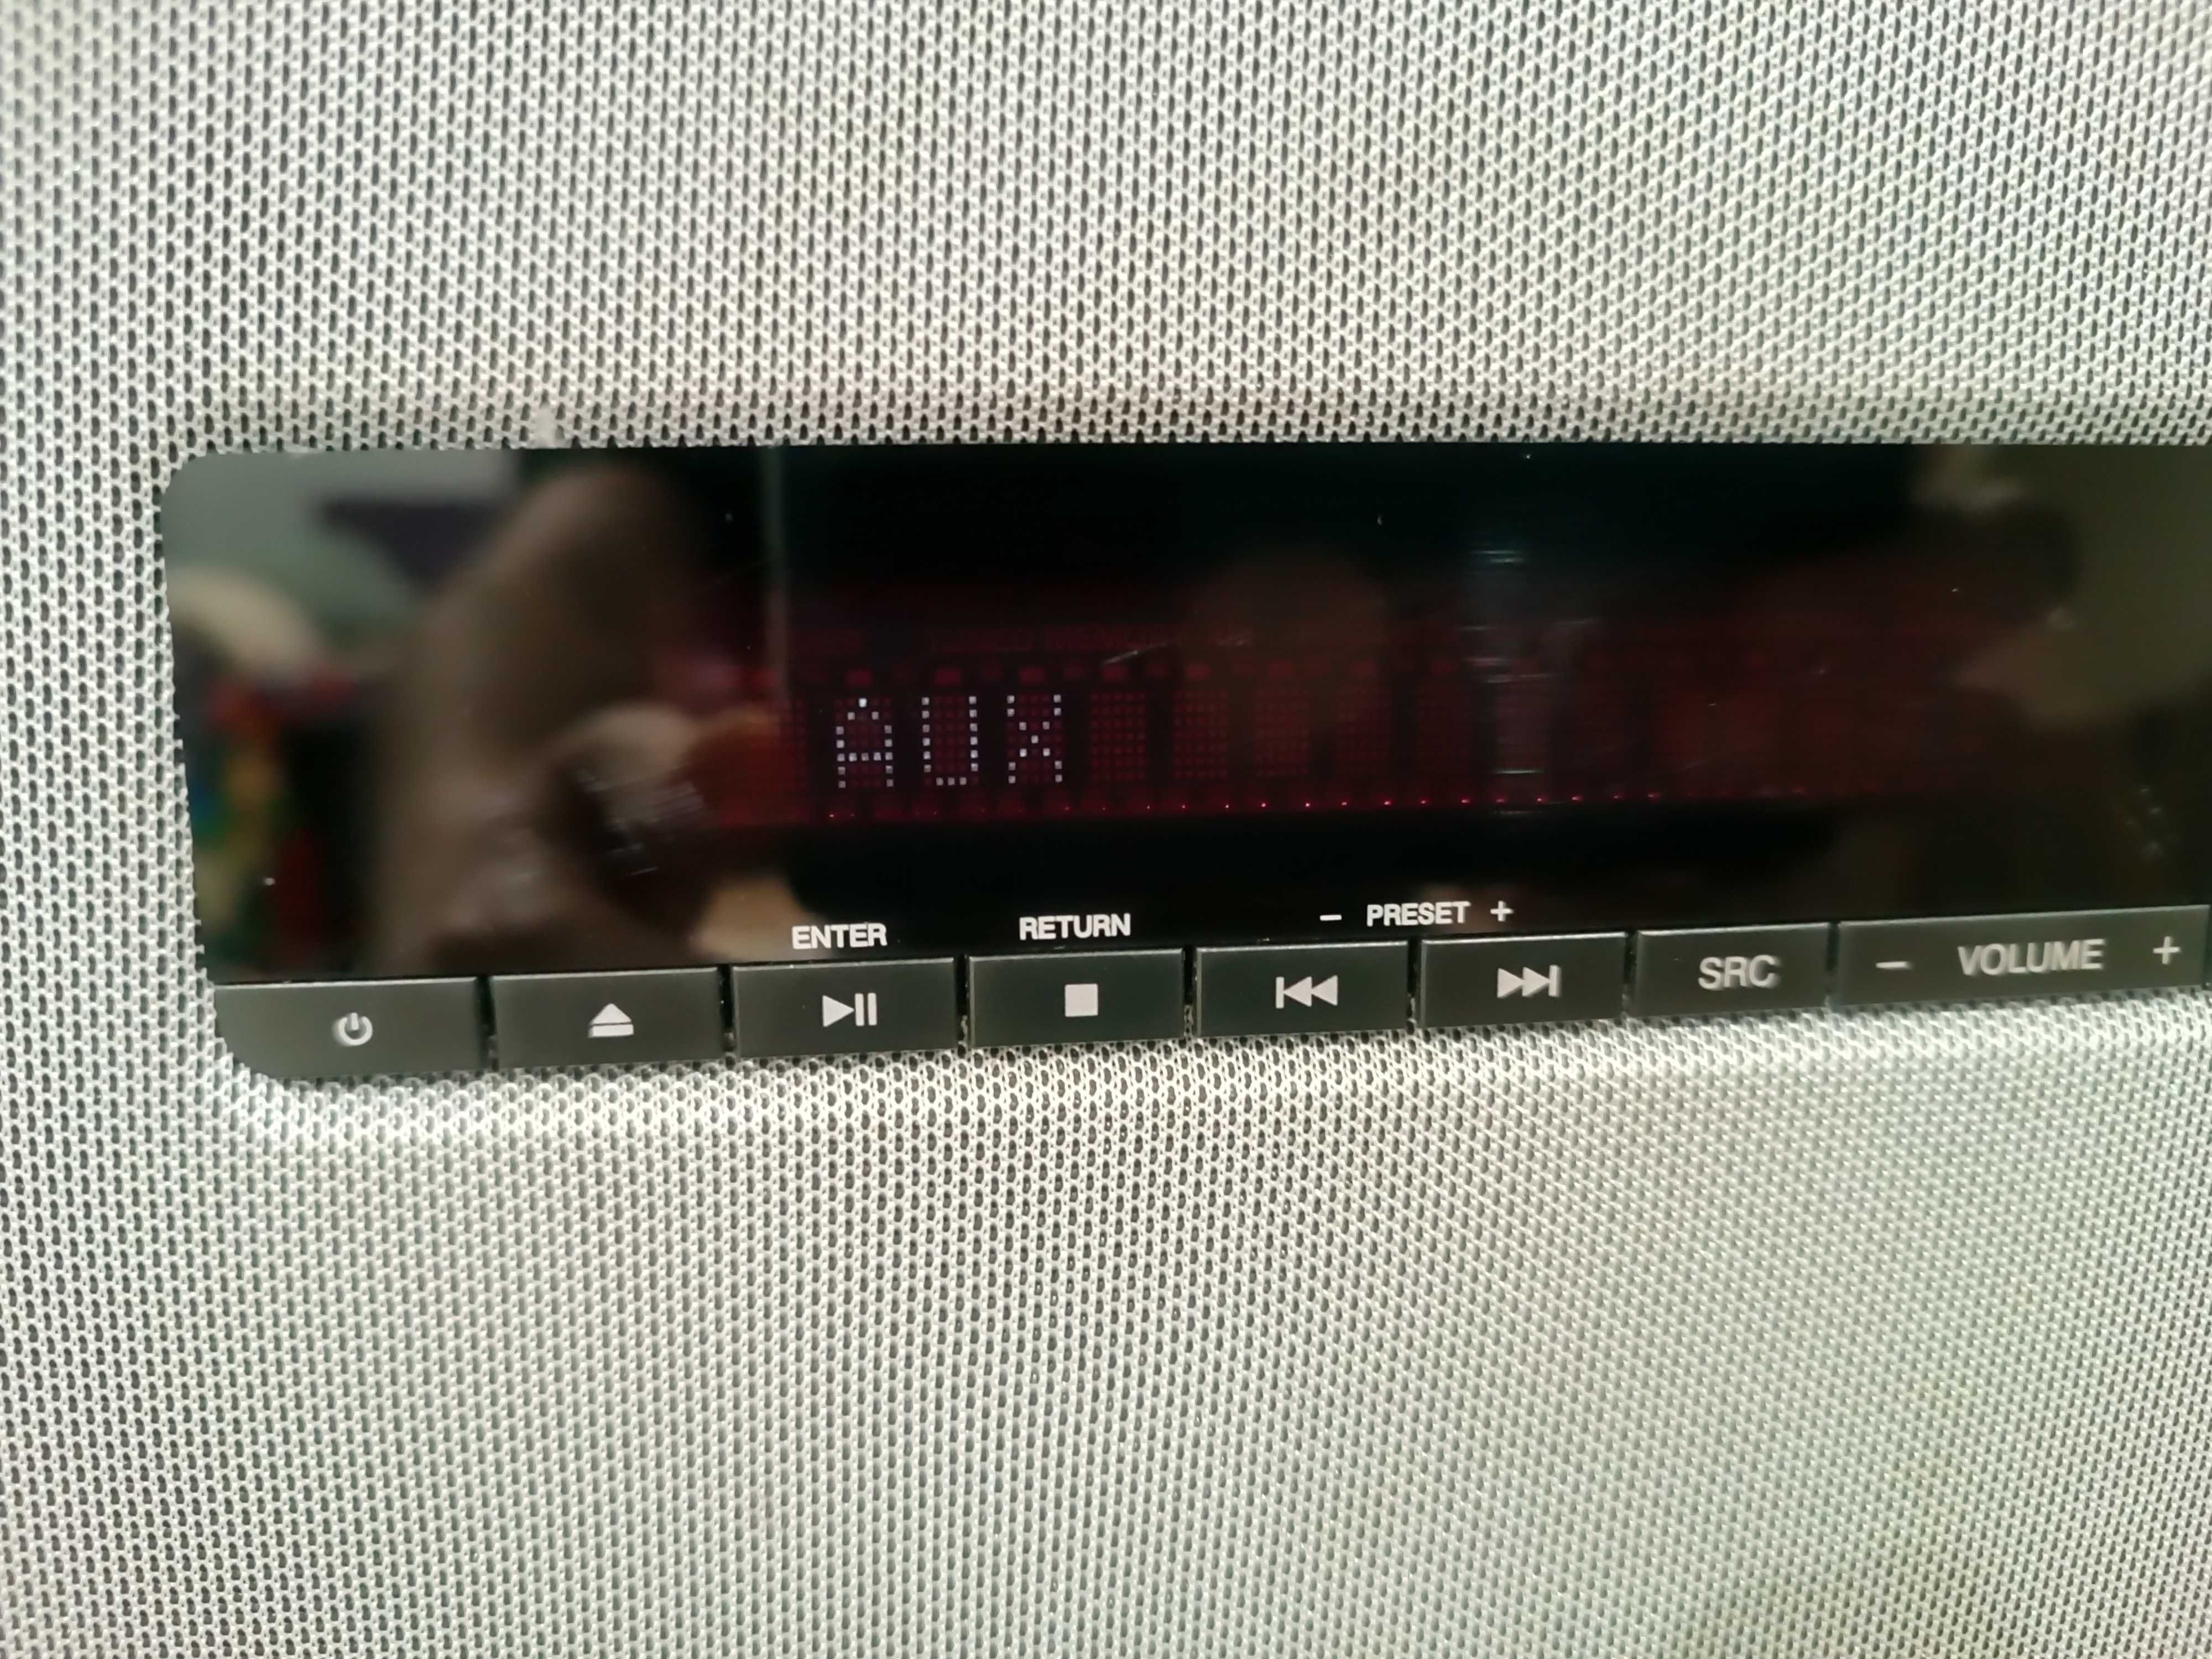 Loewe SoundBox iPod, AUX, FM, USB